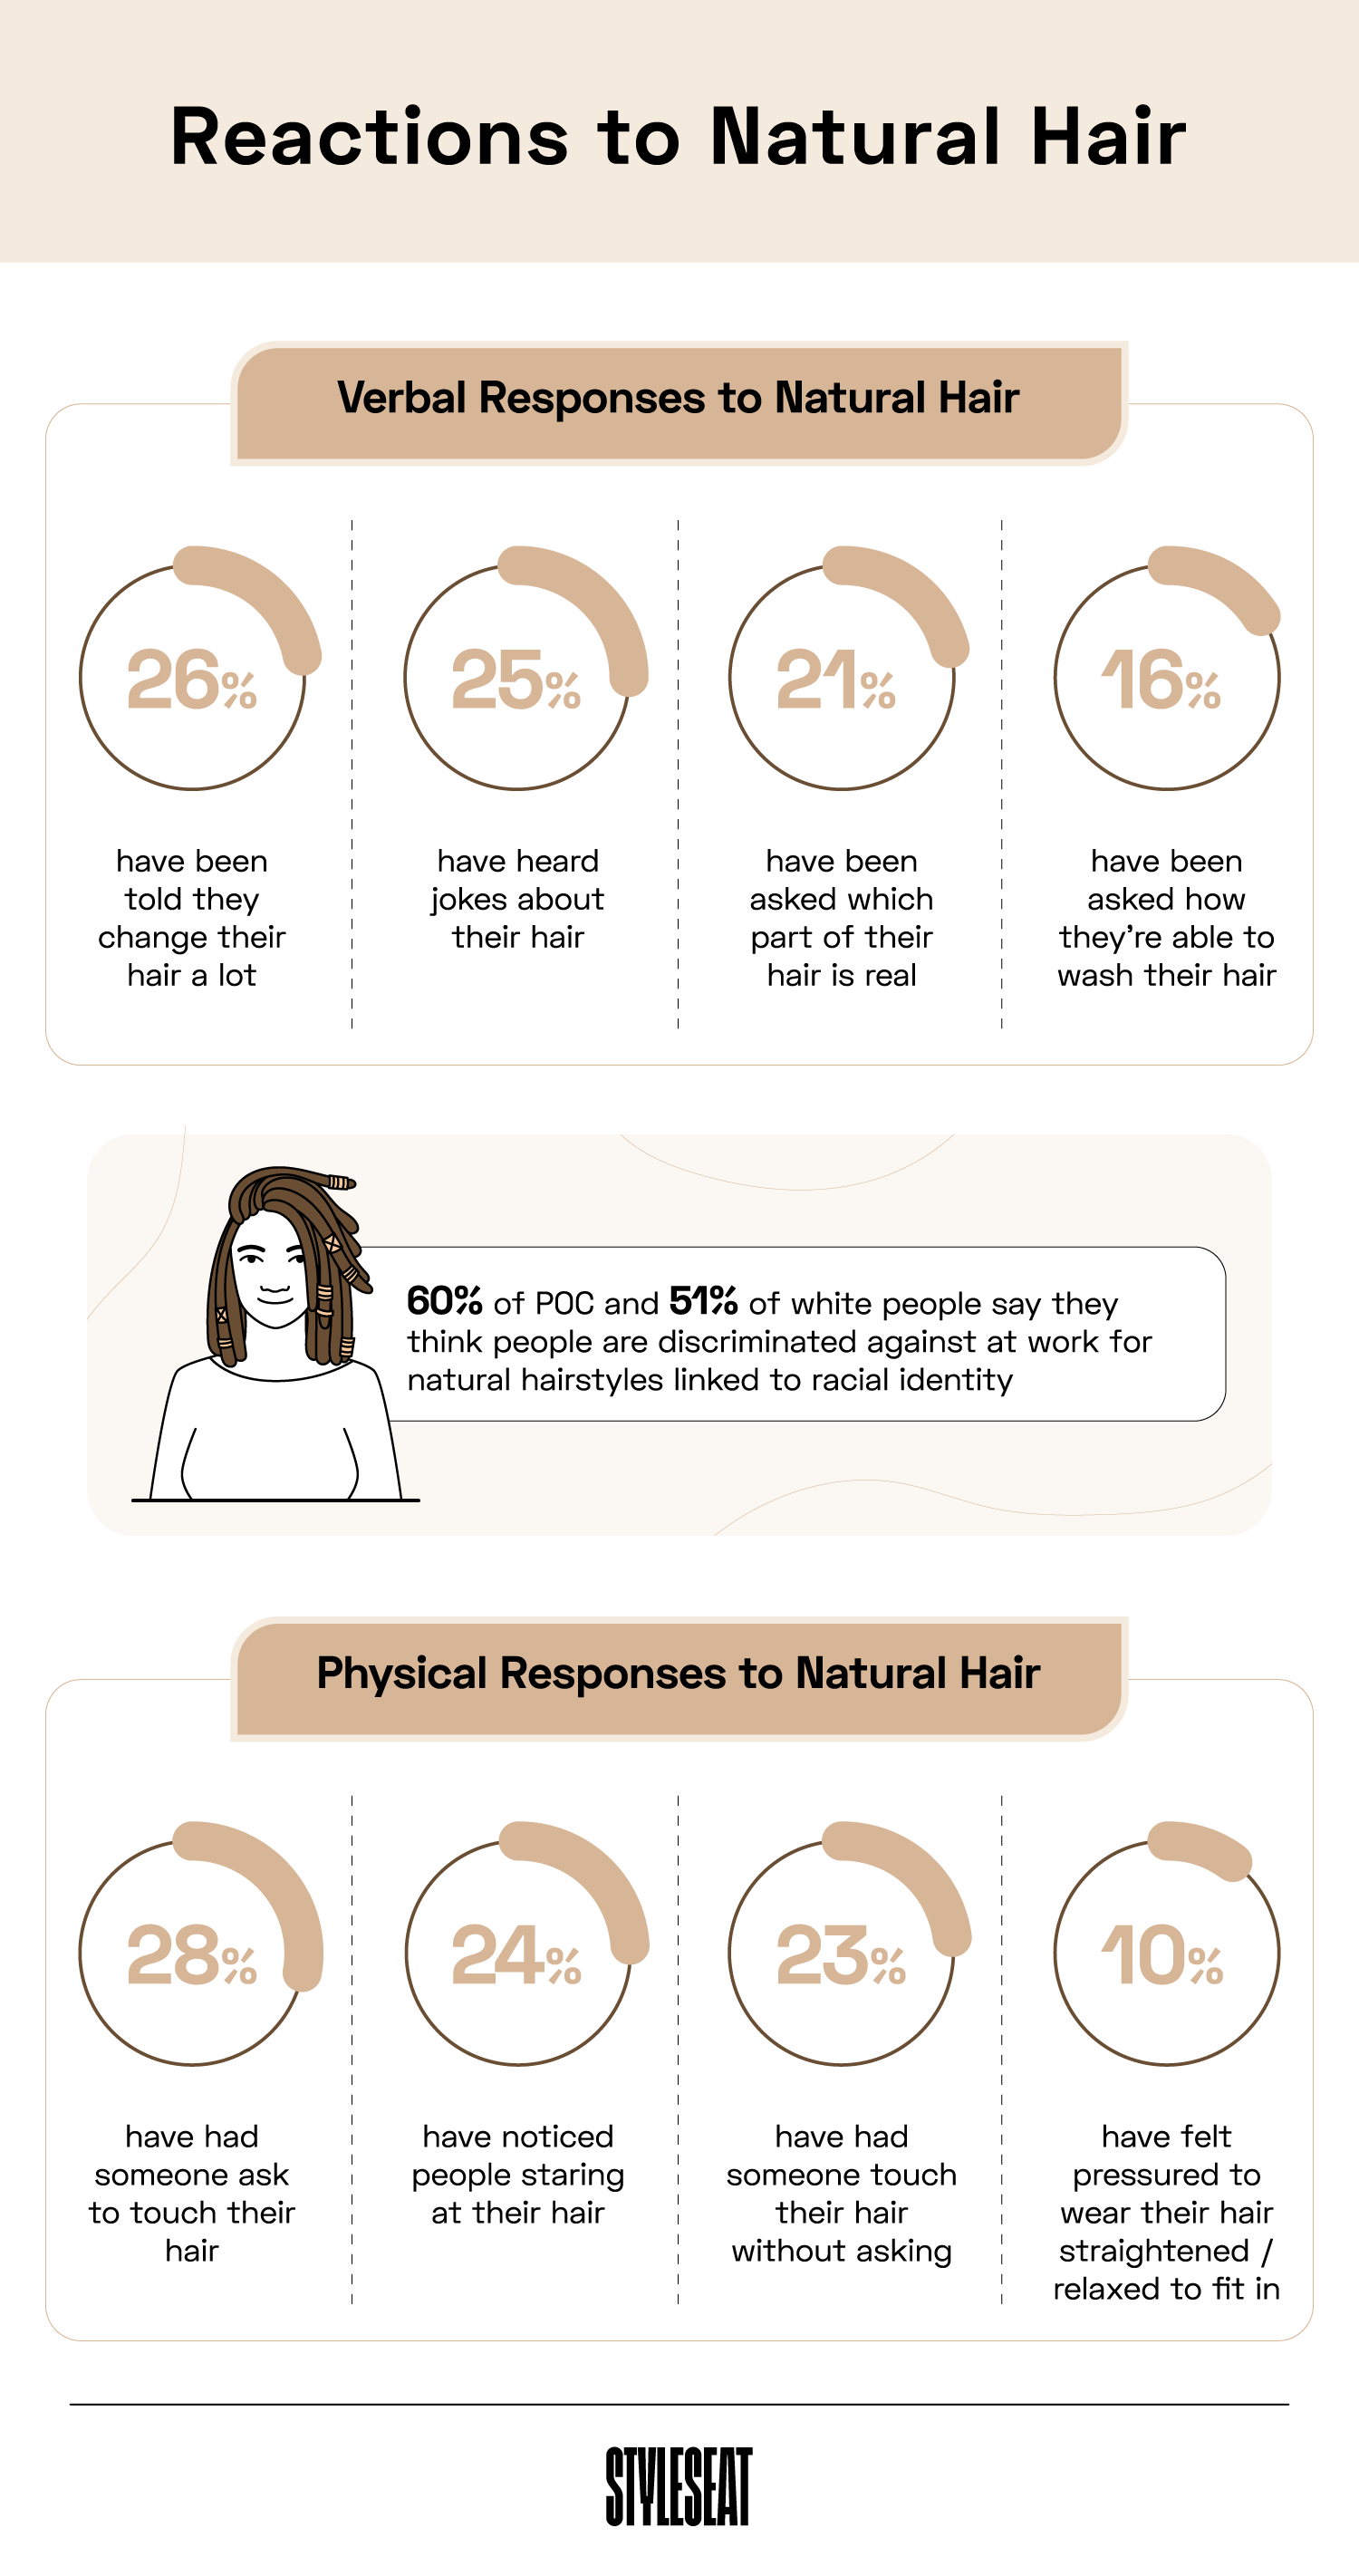 verbal and physical responses to natural hair